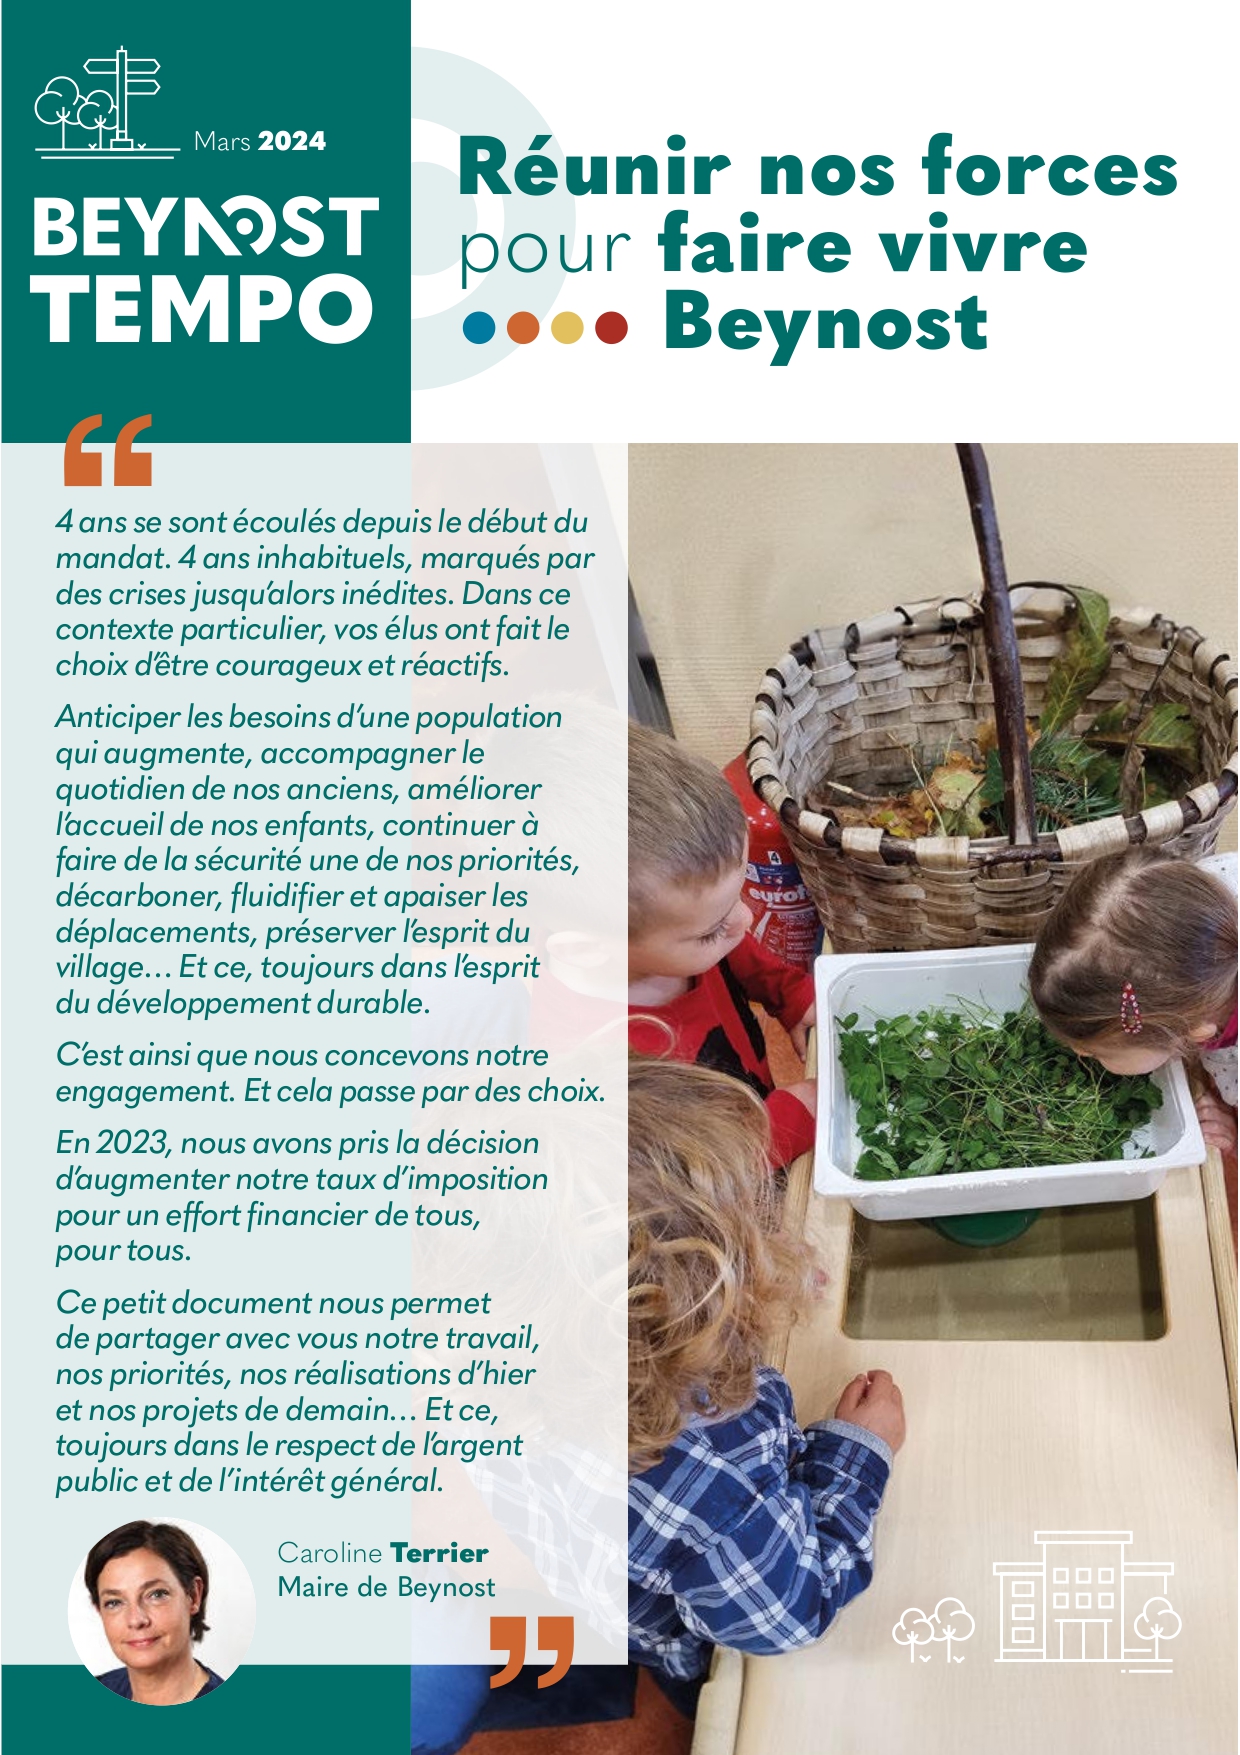 Beynost Tempo